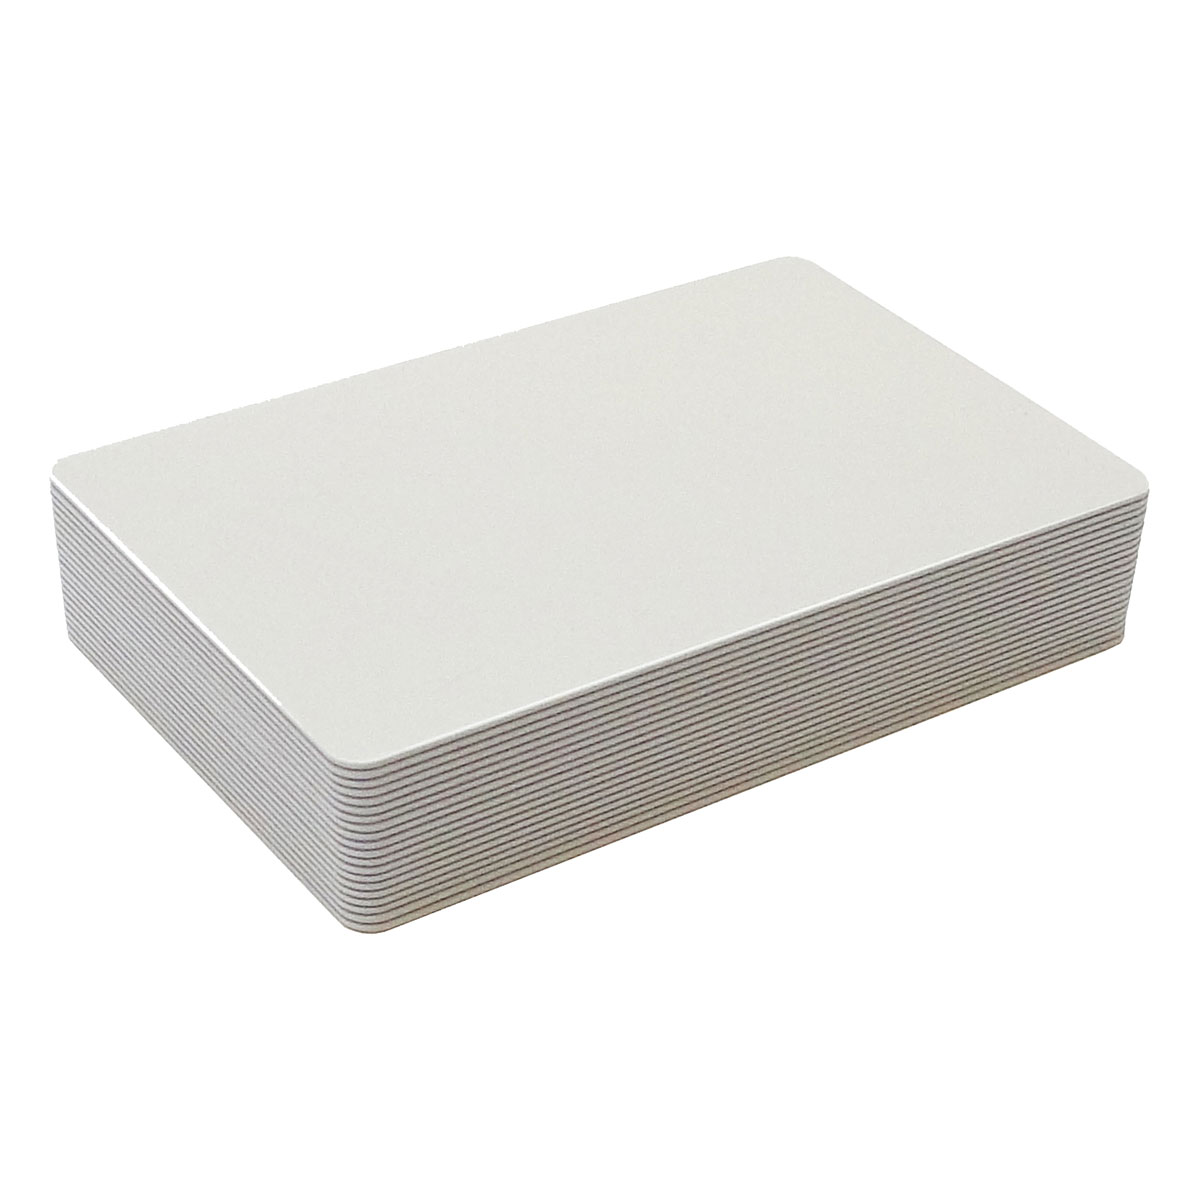 Blanko-Plastikkarten "Rapid" weiß, 0.76mm